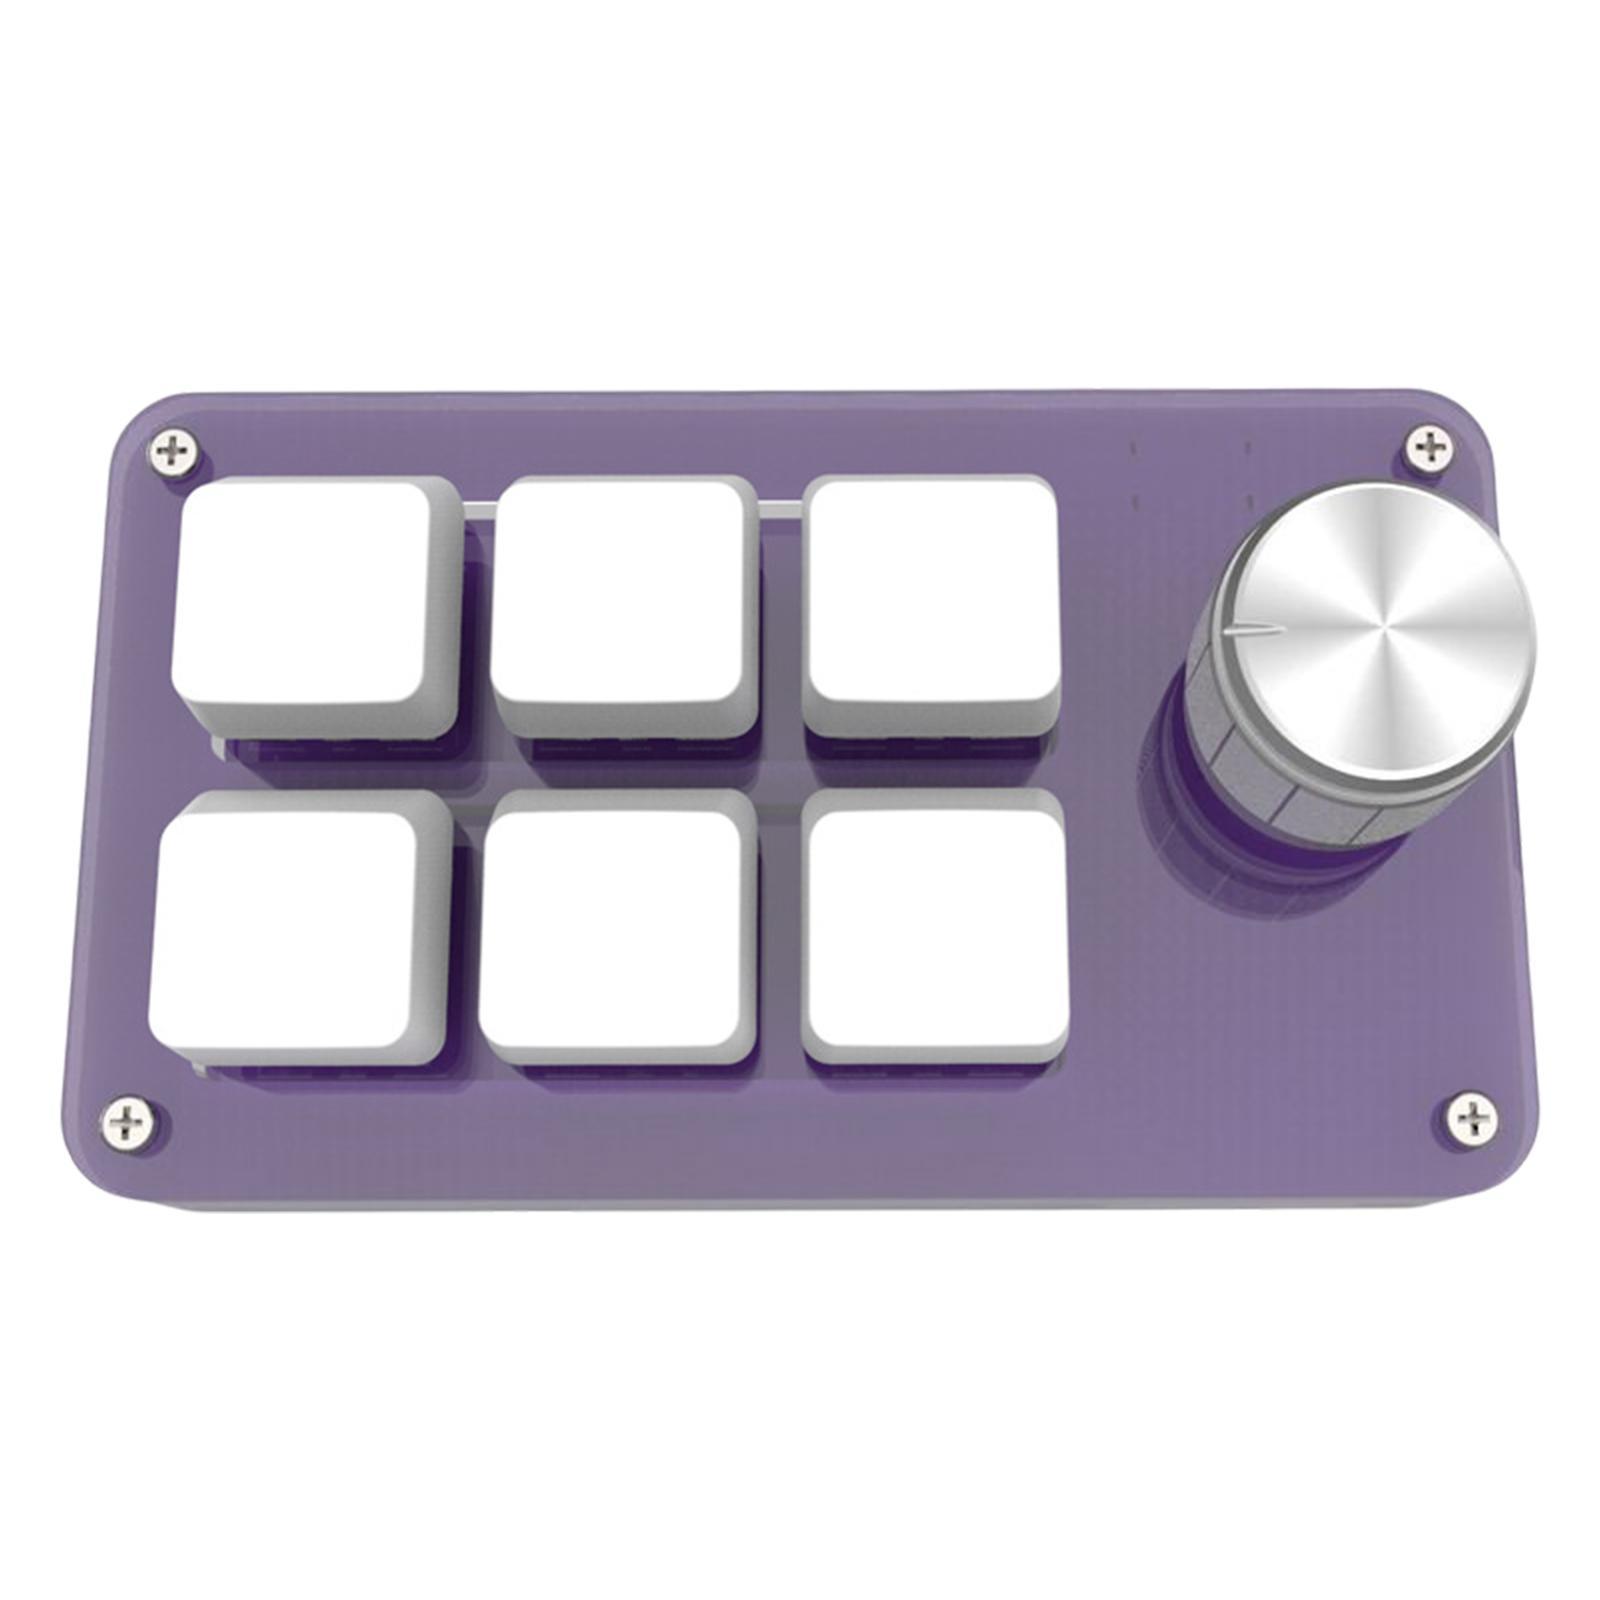 Custom Keypad 6Keys Six Key Gaming Keyboard Mechanical Keyboard for Computer